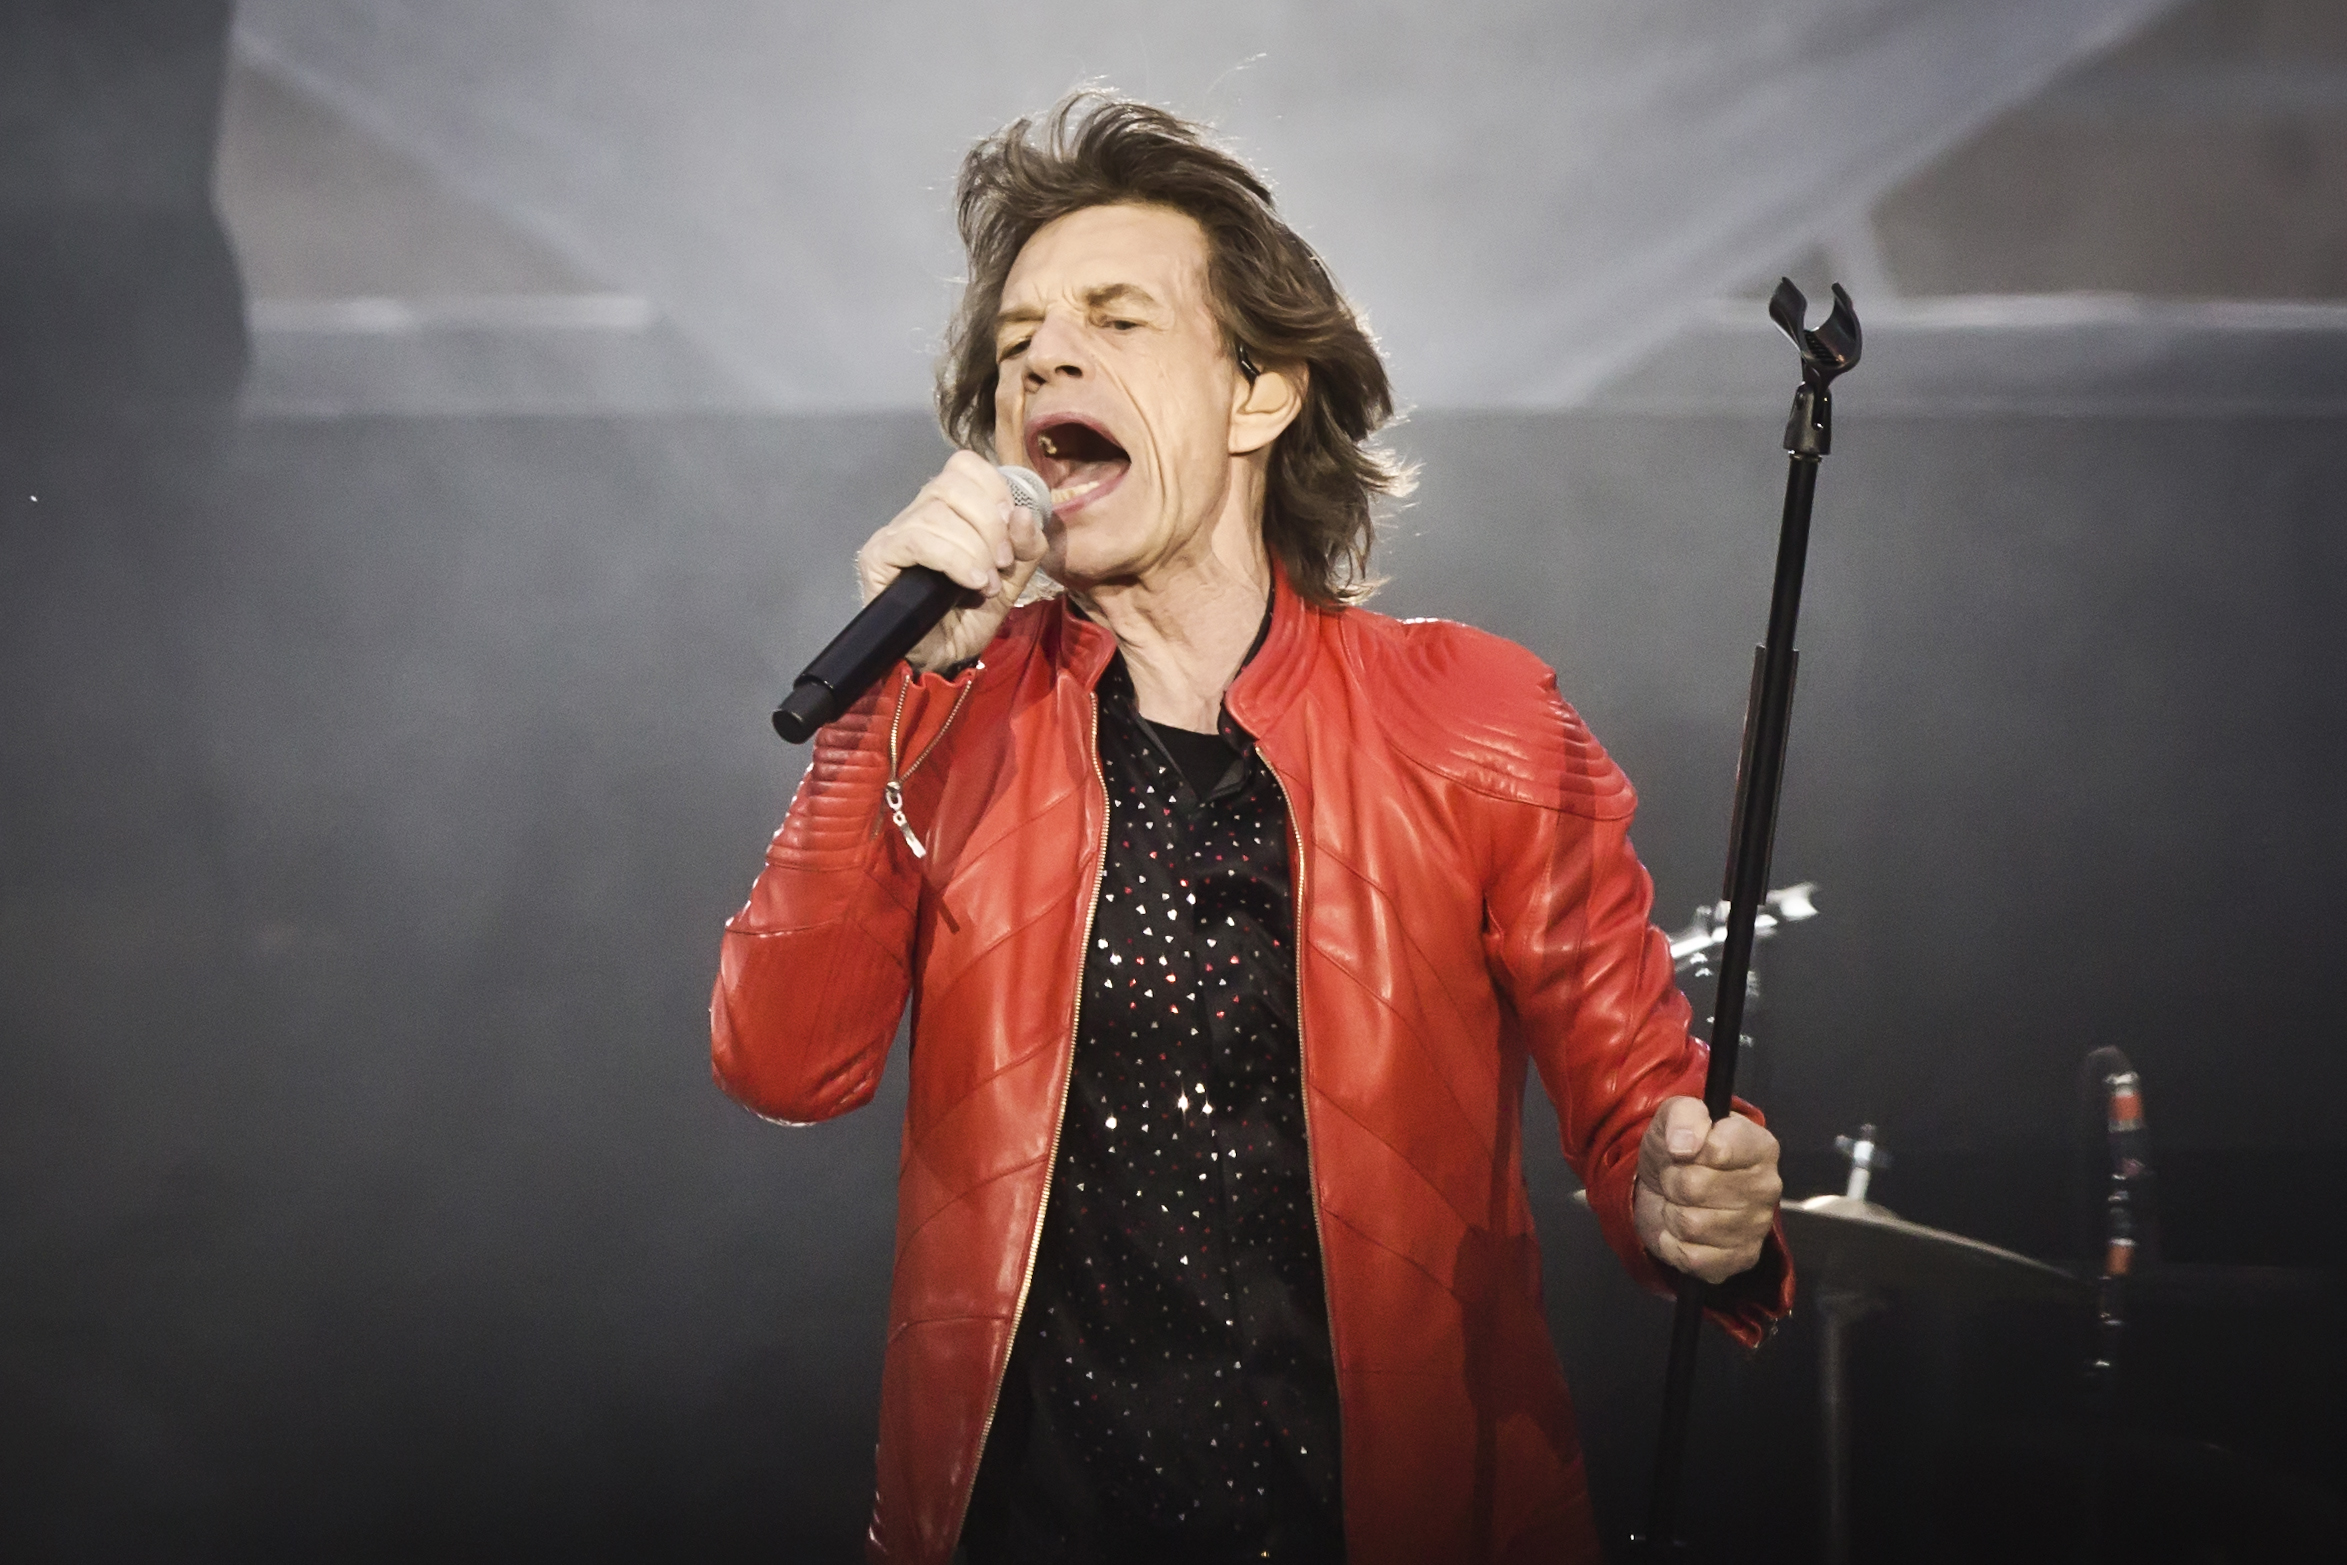 Mick Jagger live